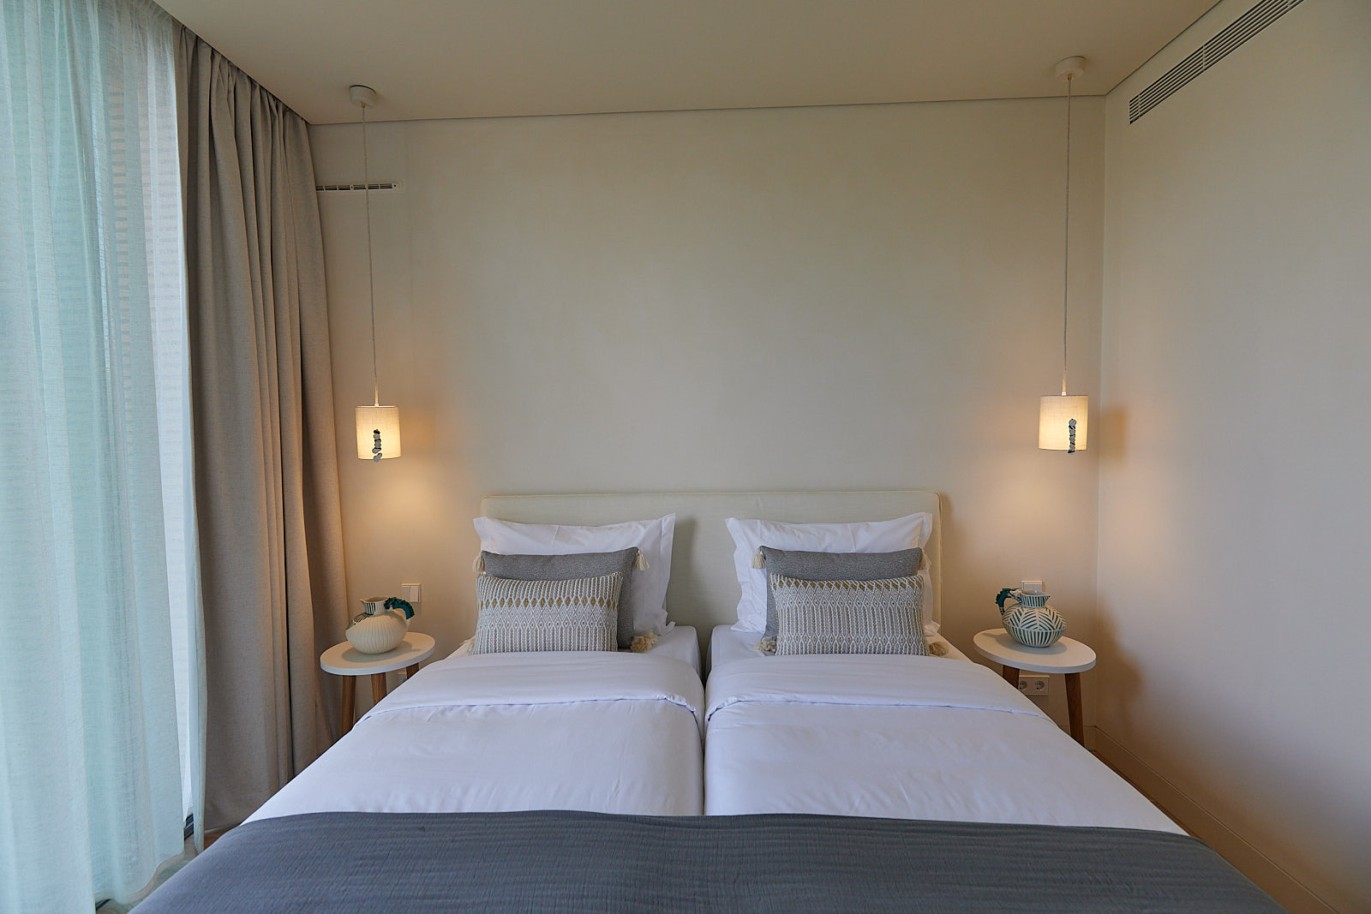 2 bedroom apartment in resort, for sale in Porches, Algarve_230568